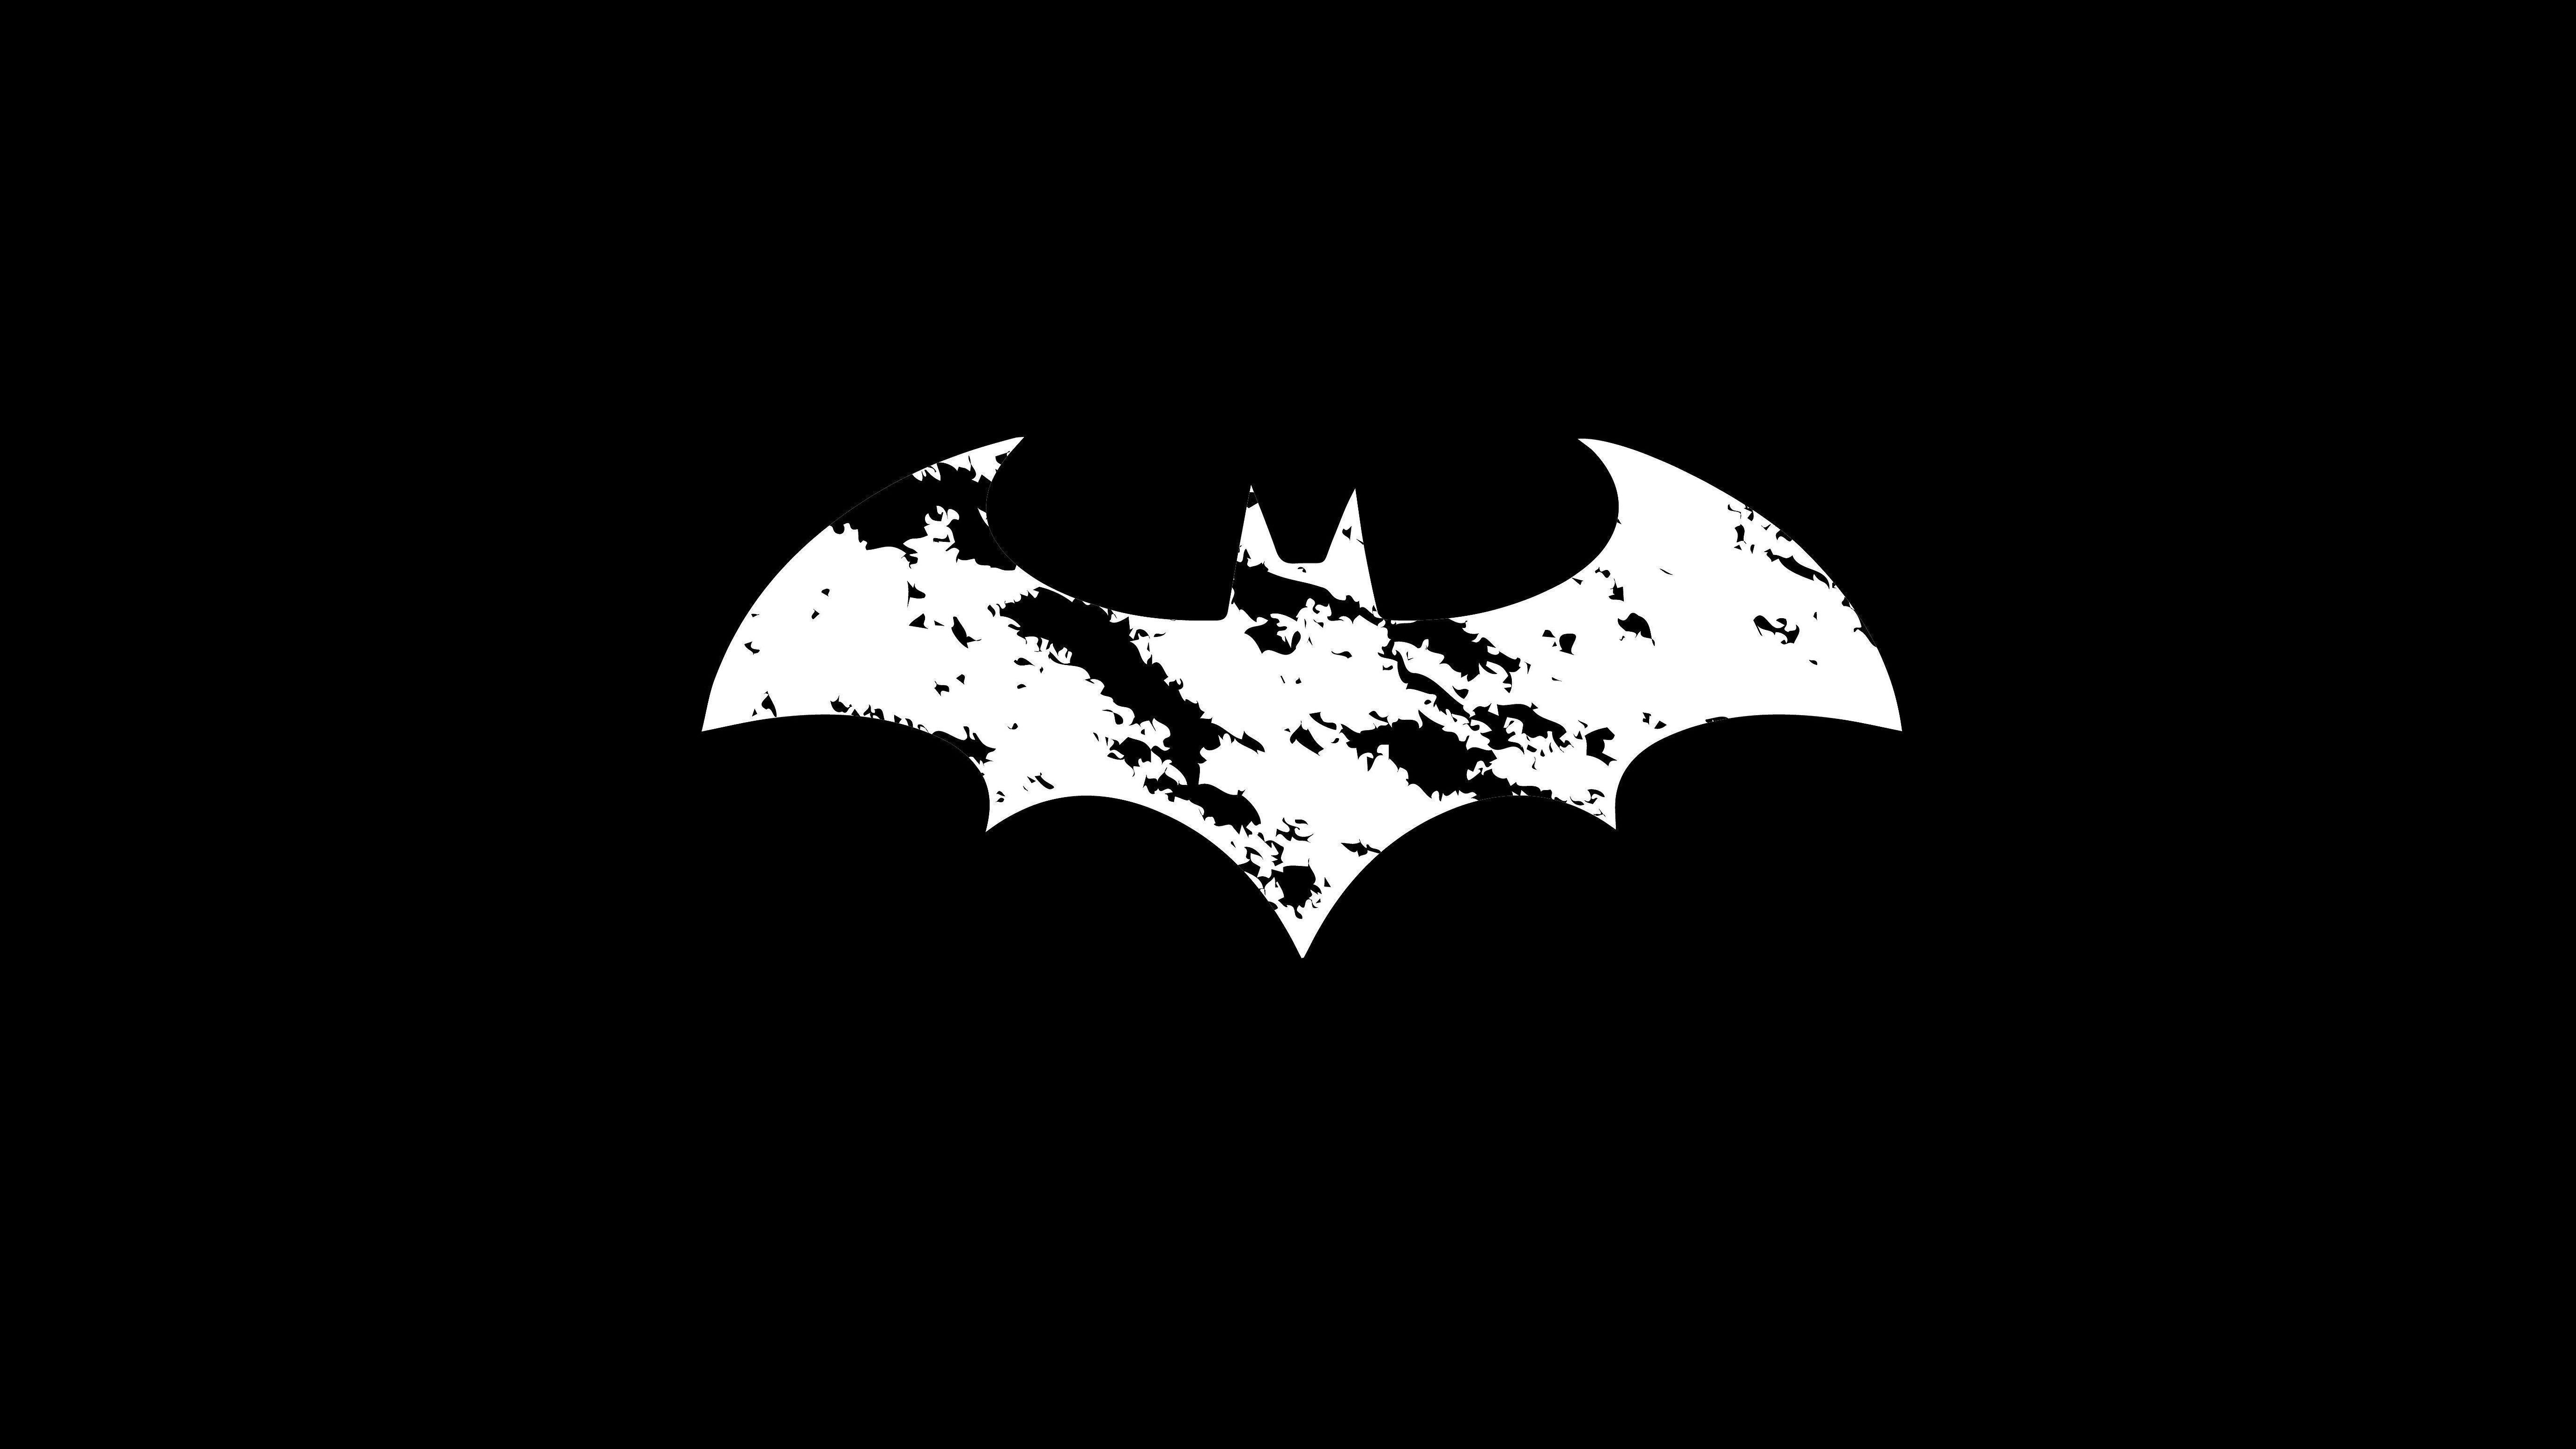 Batman Wallpaper HD 2016 download free